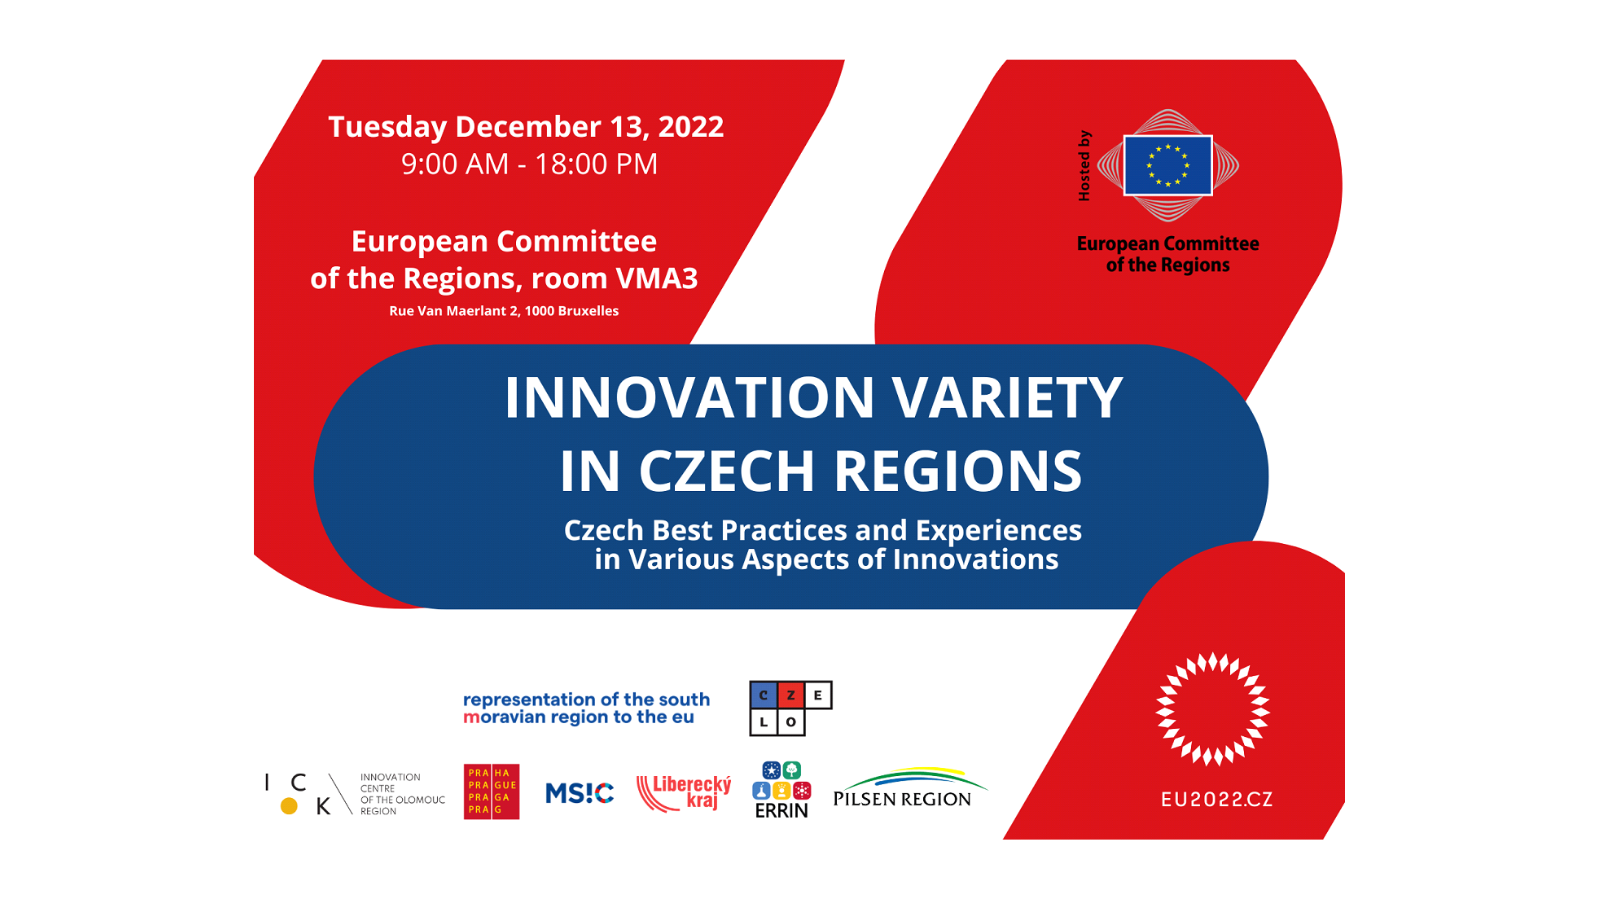 Innovation variety in Czech regions